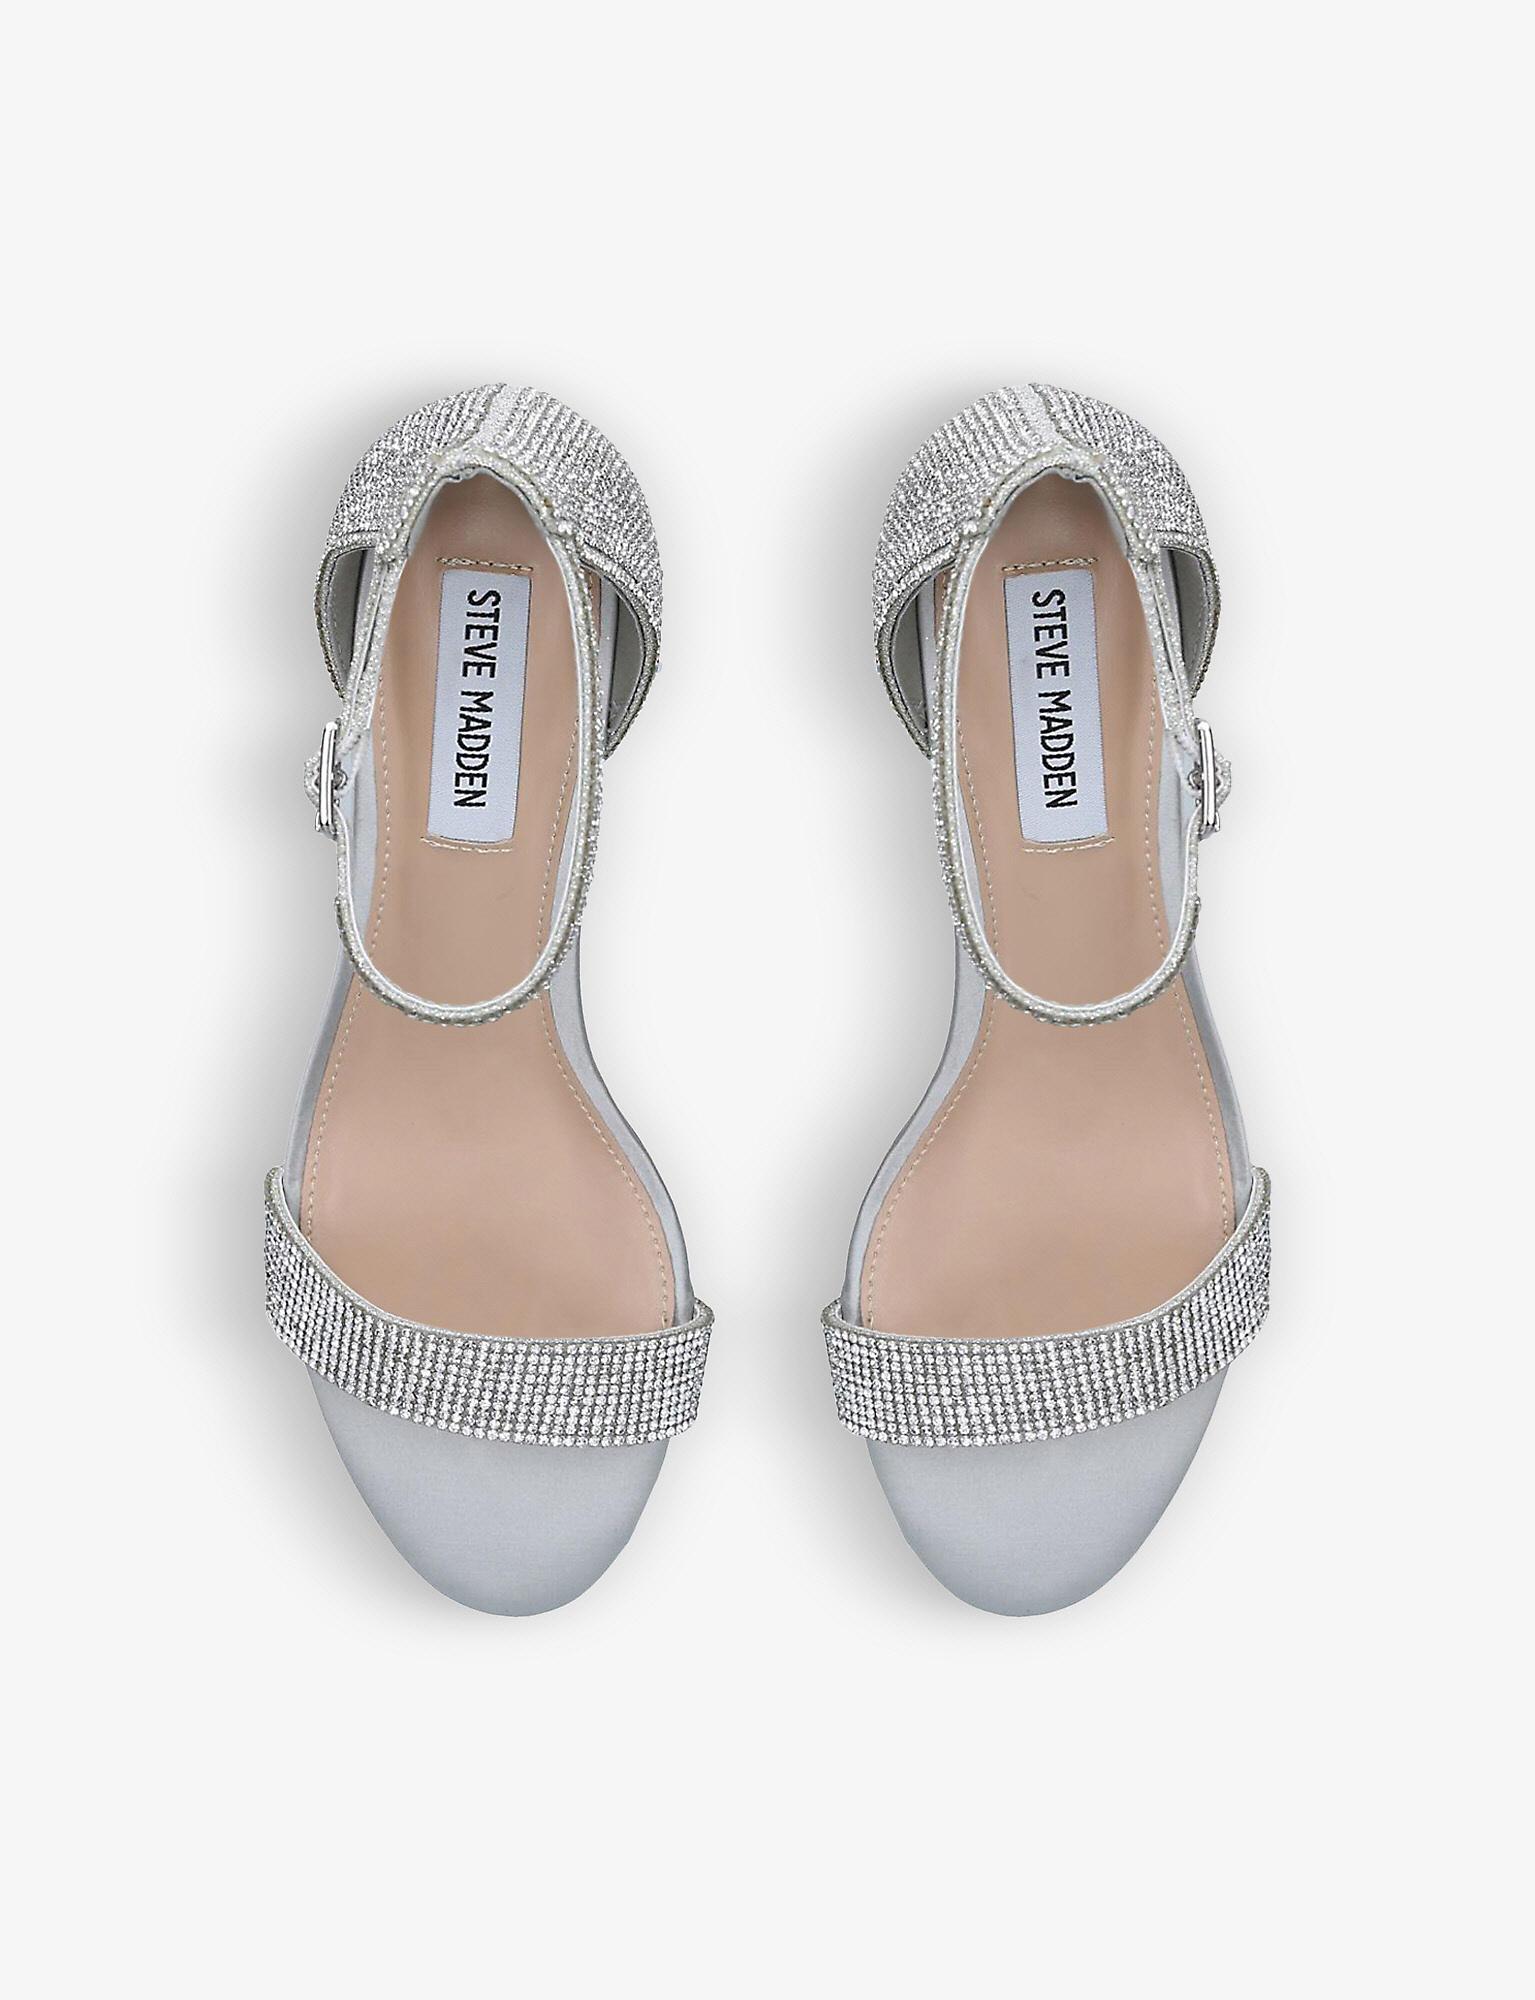 Steve Madden Irenee-r Heeled Rhinestone-embellished Sandals in White | Lyst